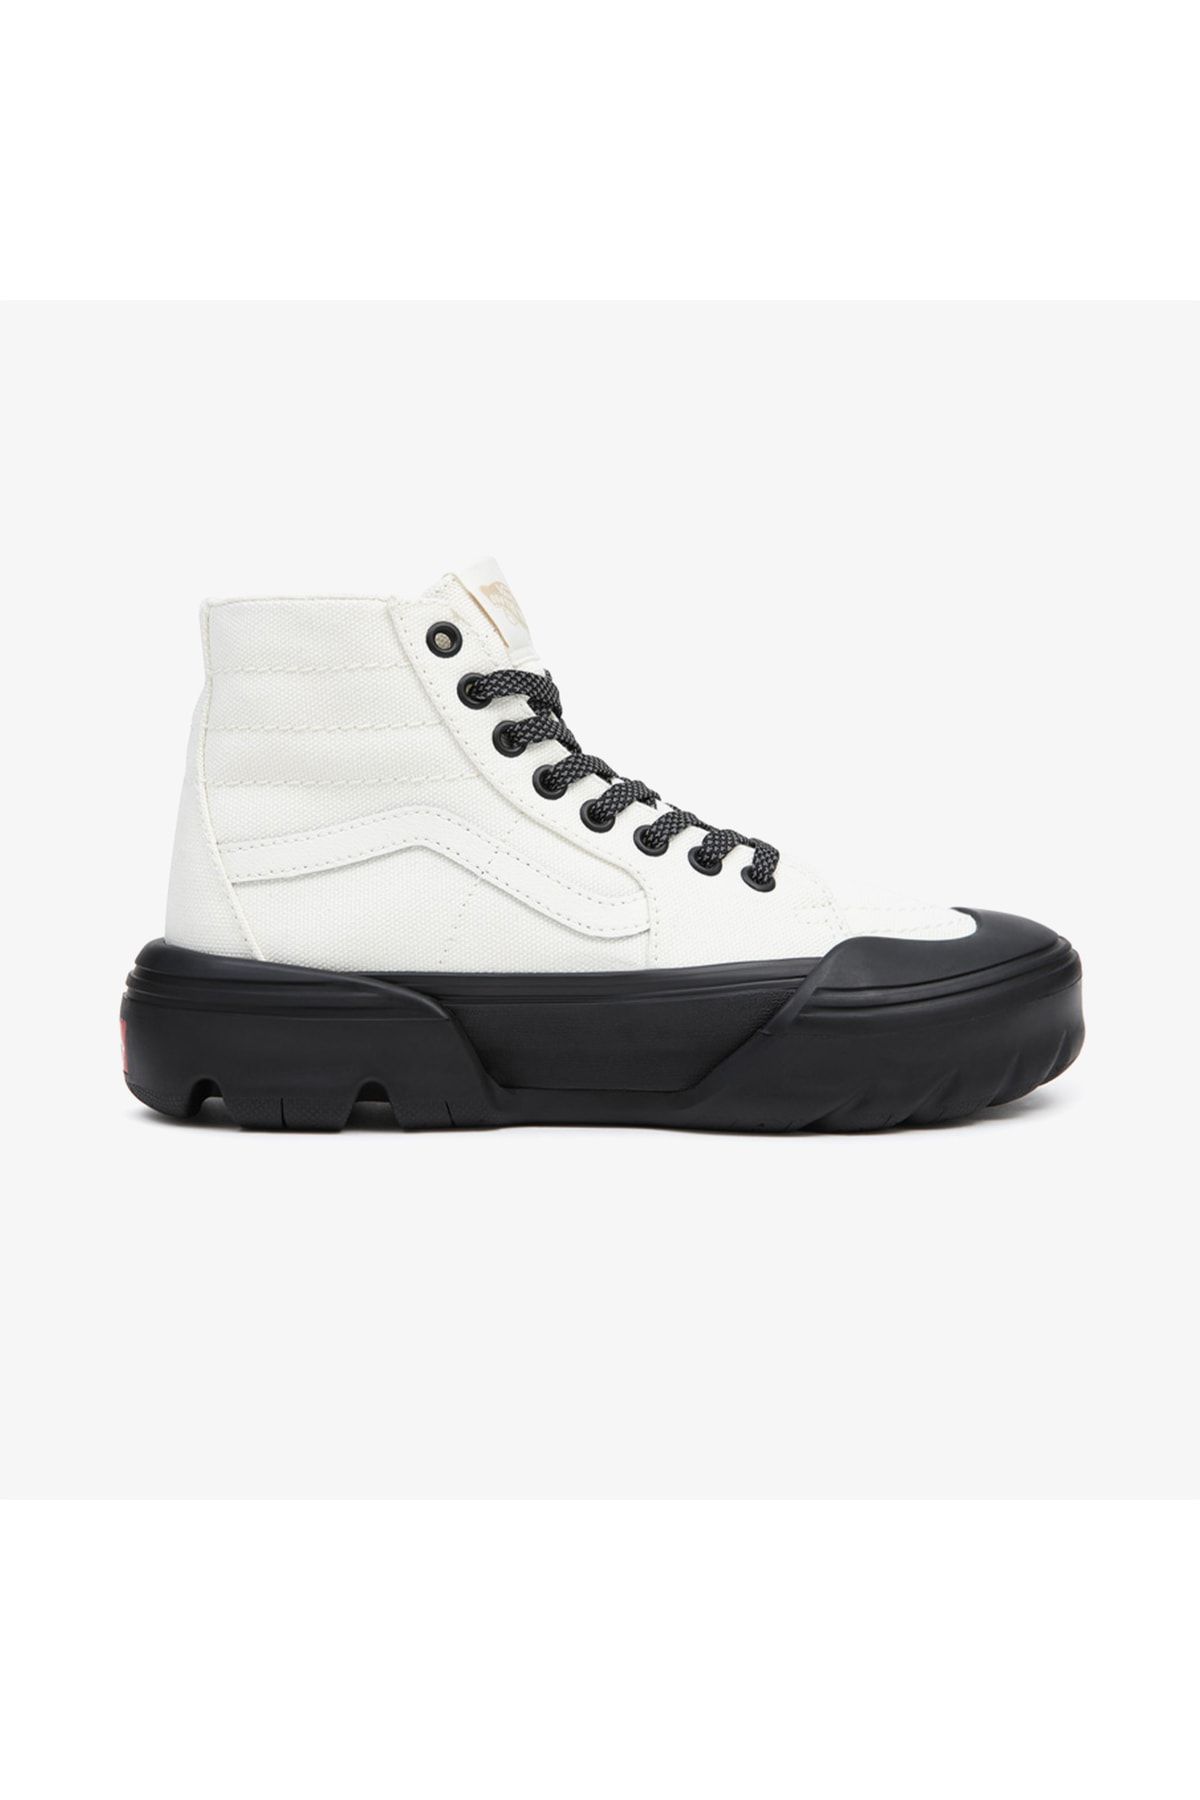 Vans Ua Sk8-hi Tapered Modular Kadın Beyaz Sneaker